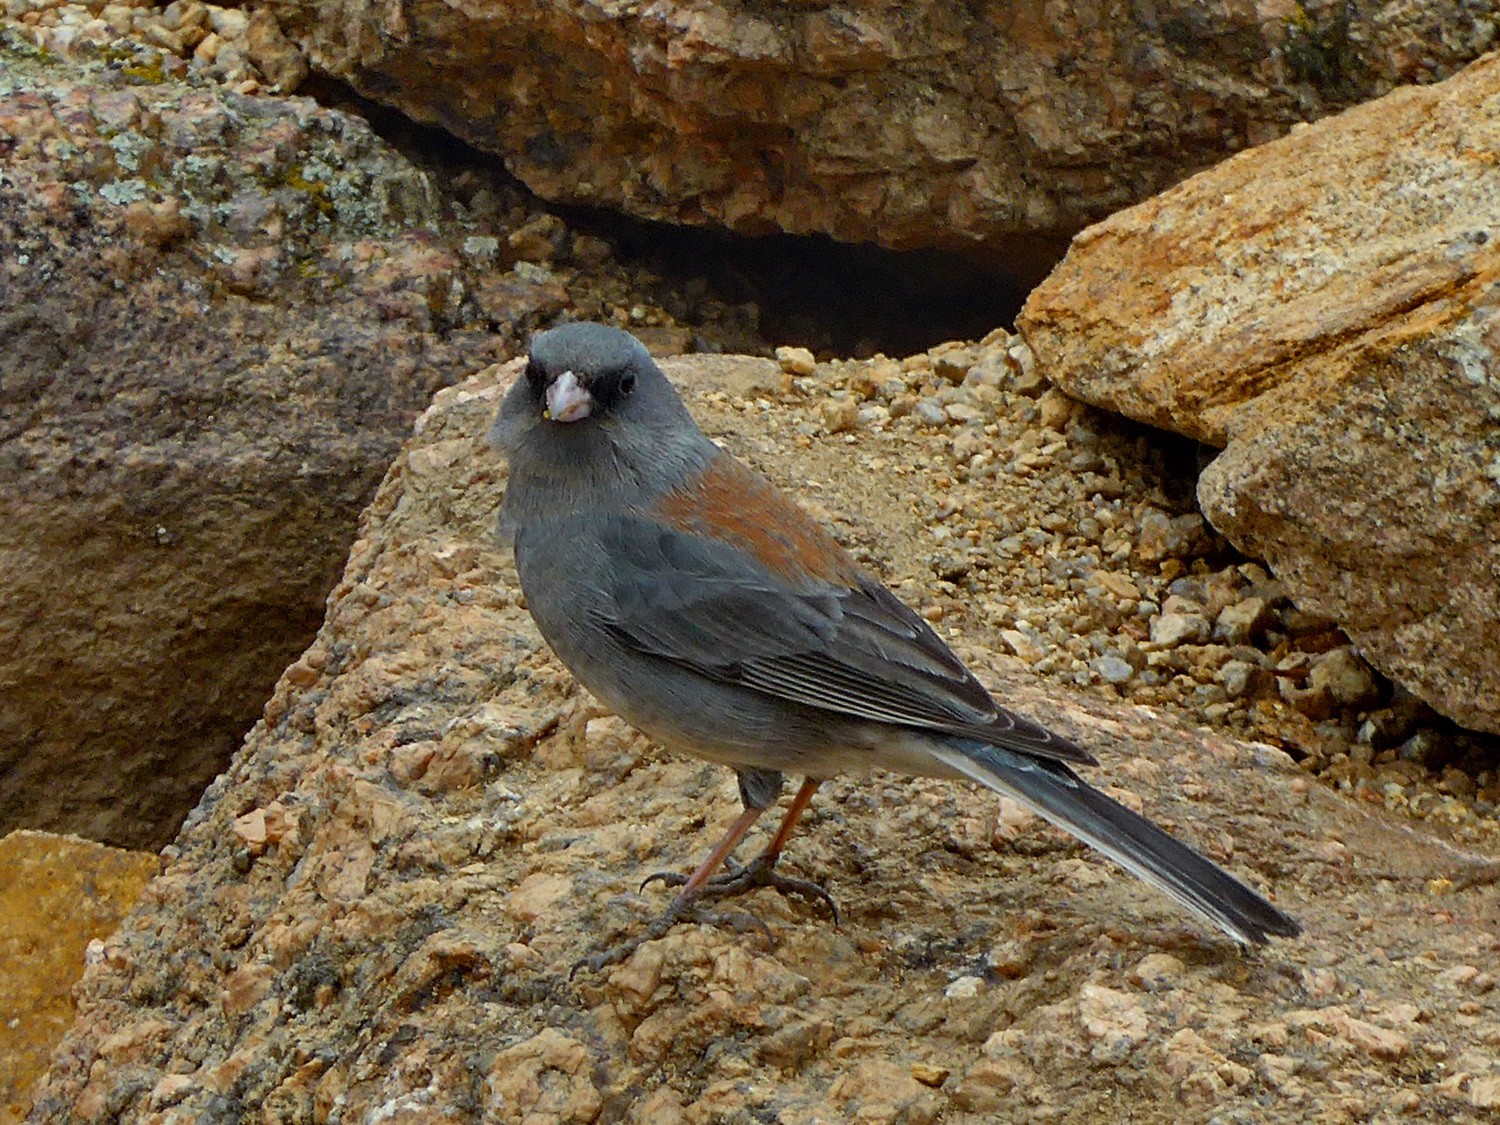 Gray-red bird